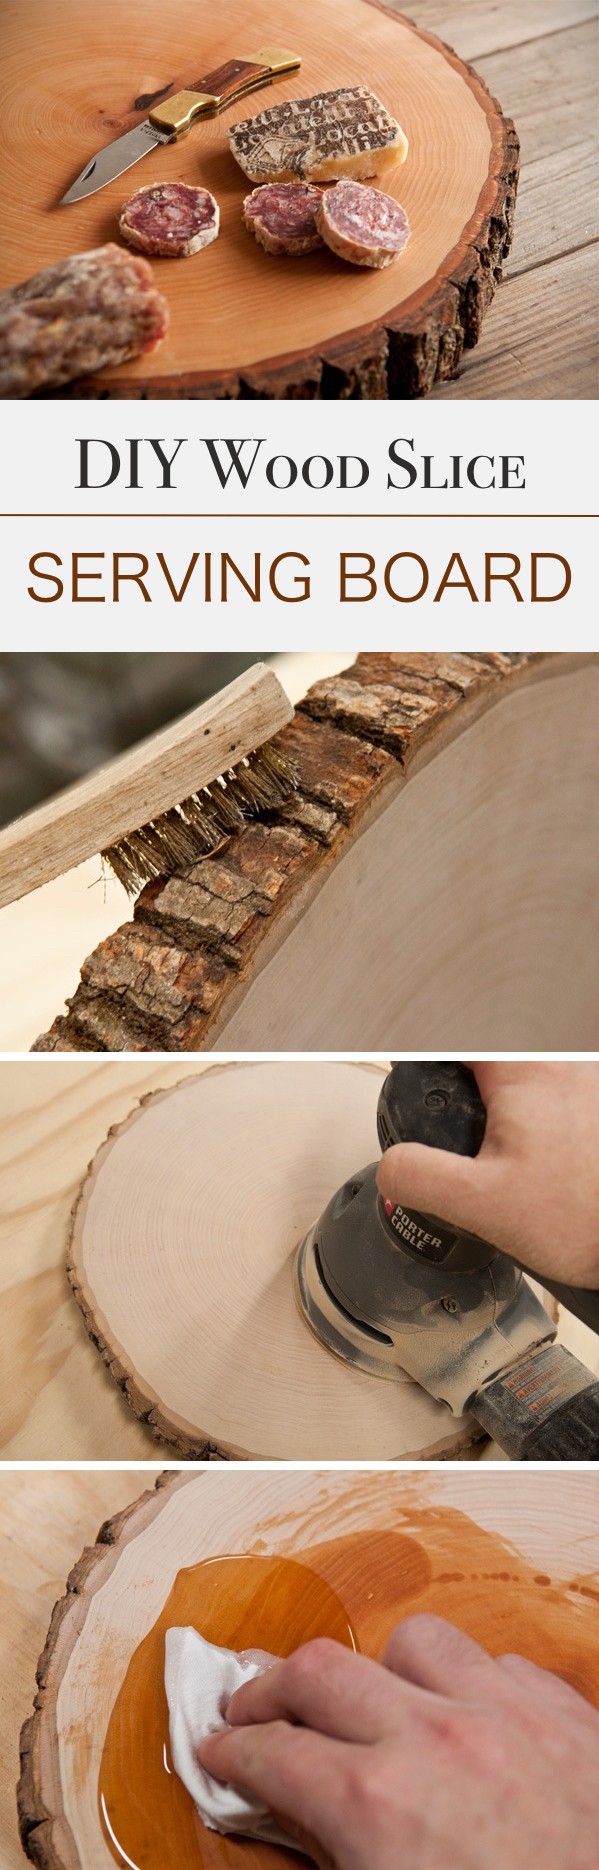 DIY Wood Slice Serving Board